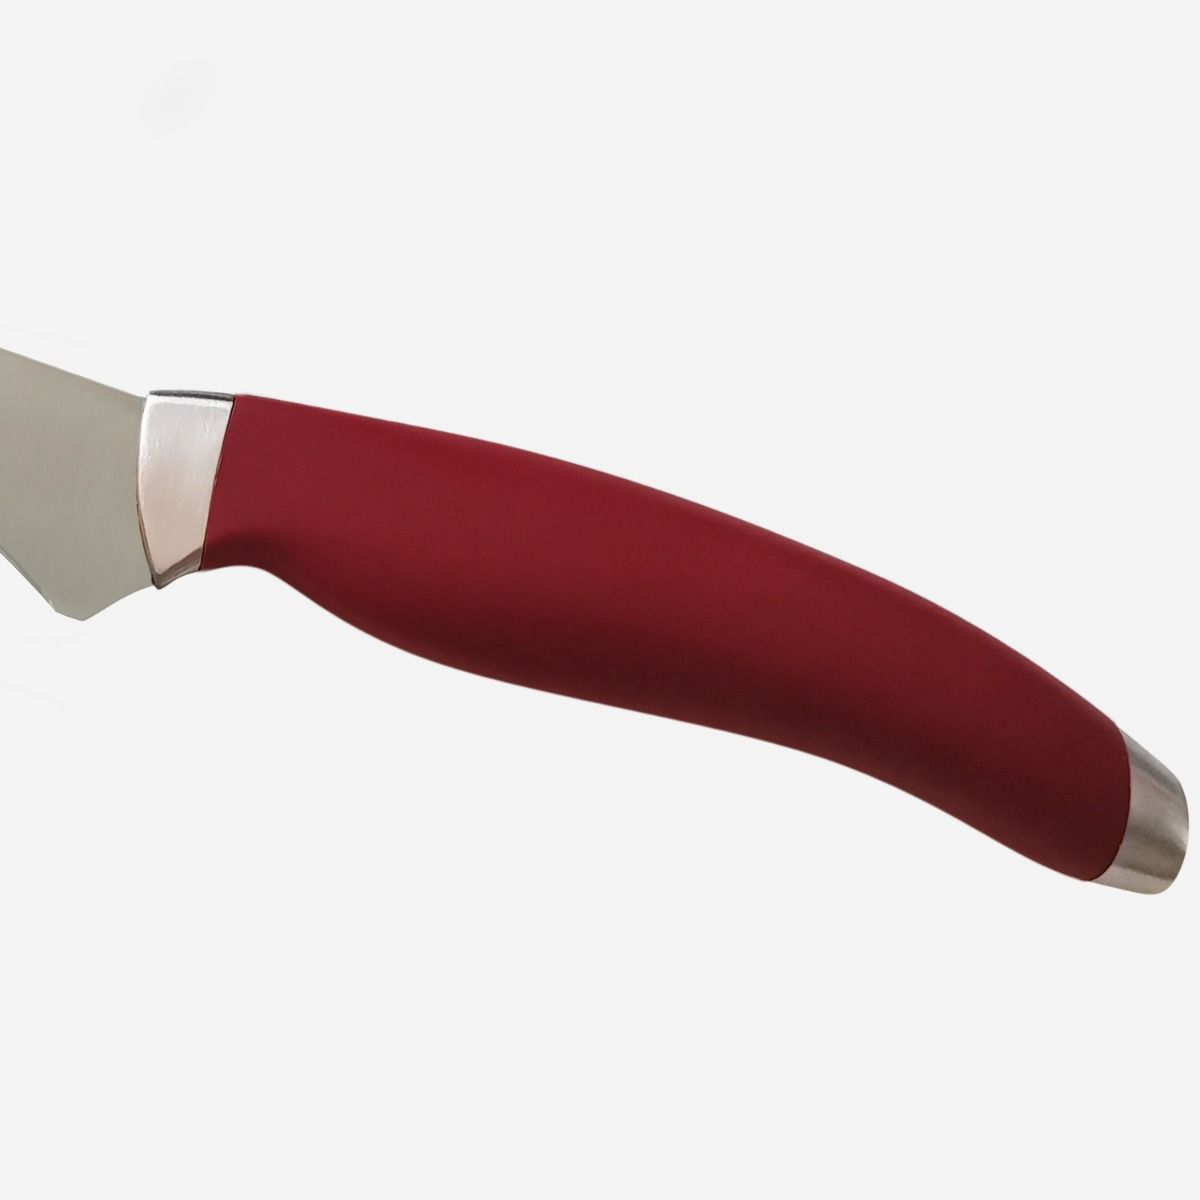 Chef's Knife 15 cm  Stainless Steel Berkel Teknica Handle Red Resin